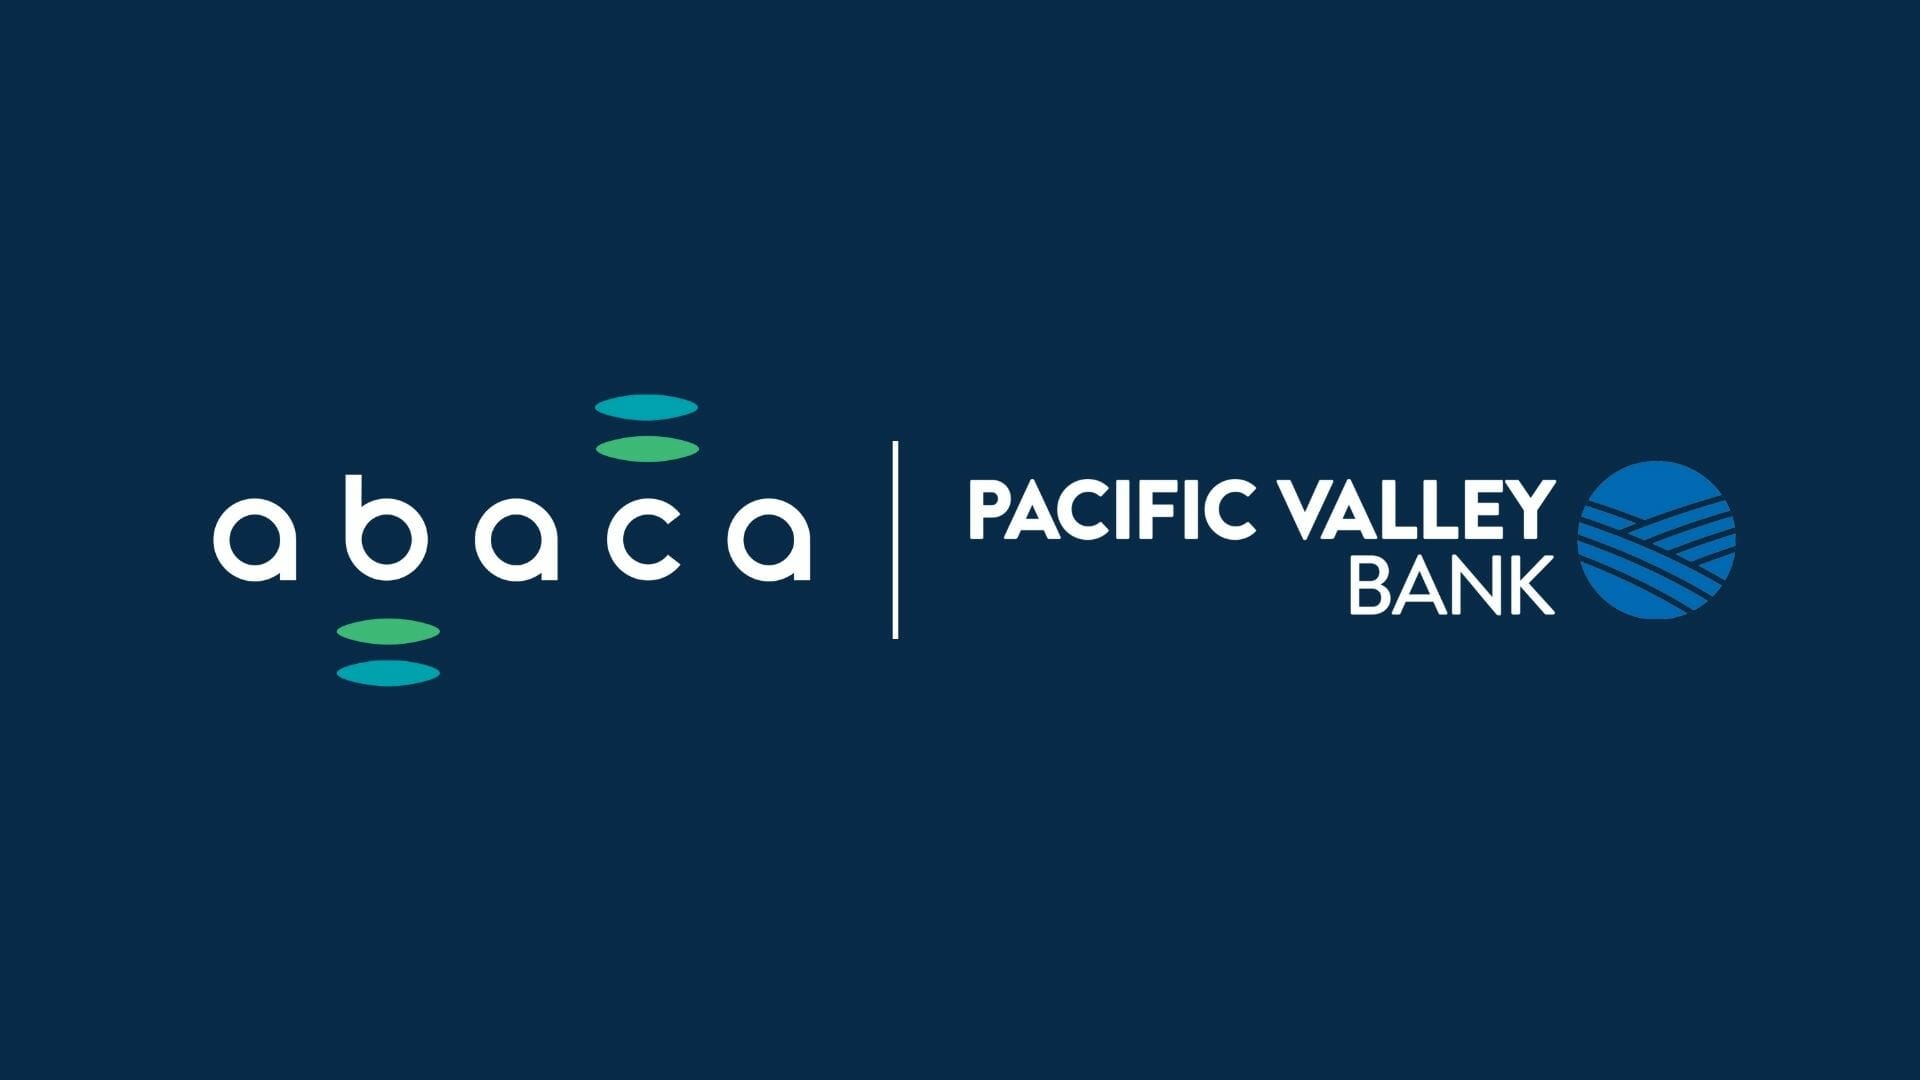 abaca logo and pacific valley bank logo